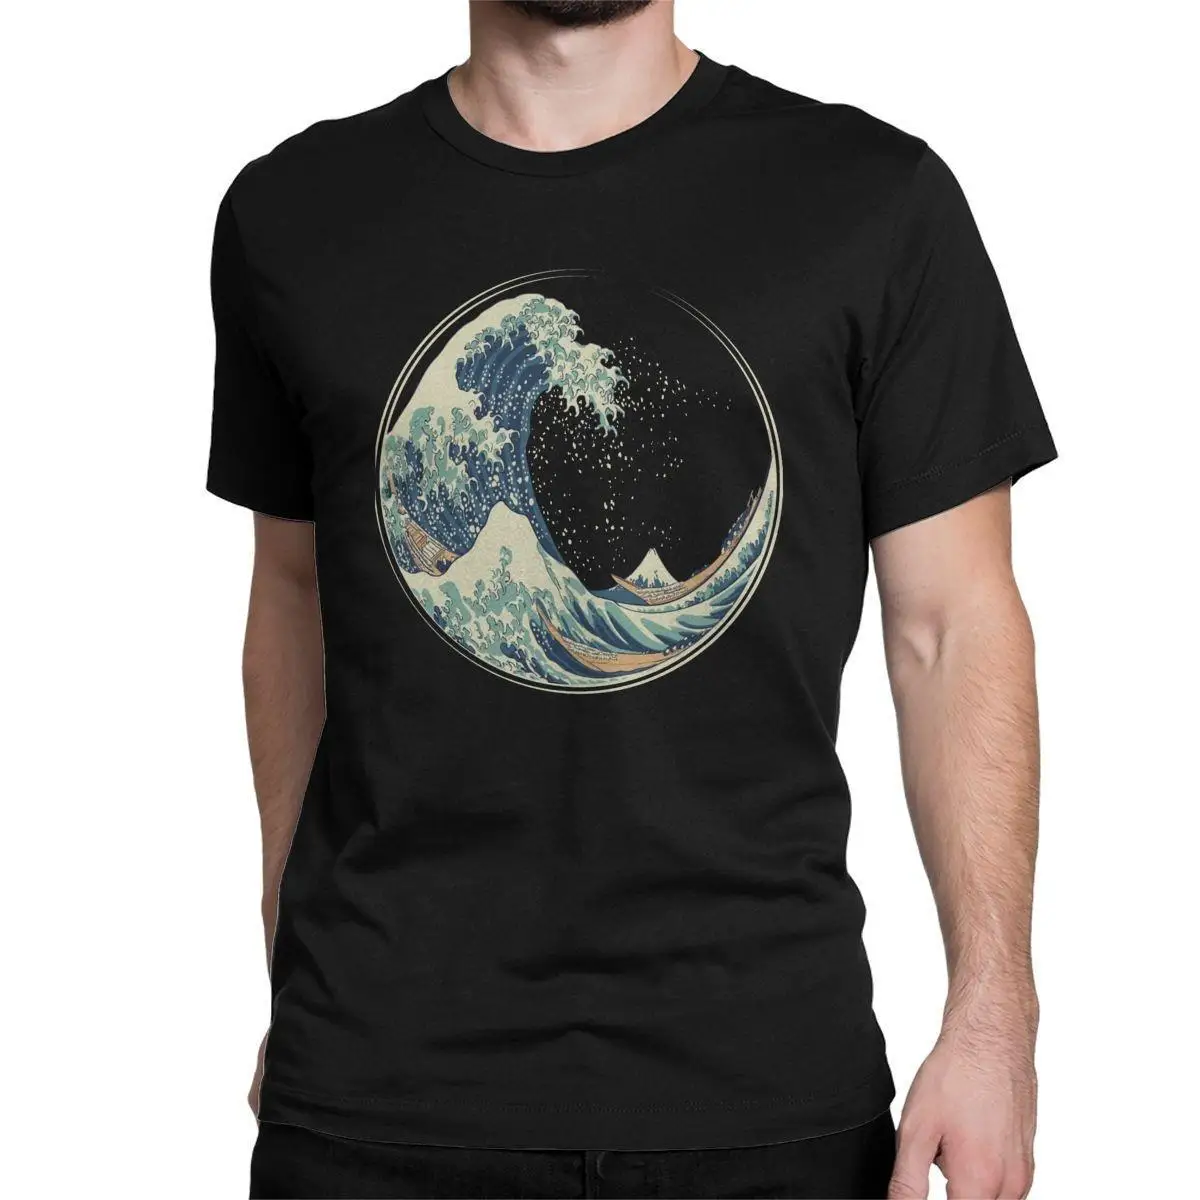 The Great Wave T Shirt for Men 100% Cotton Vintage T-Shirt O Neck Katsushika Hokusai Tee Shirt Short Sleeve Clothes Gift Idea